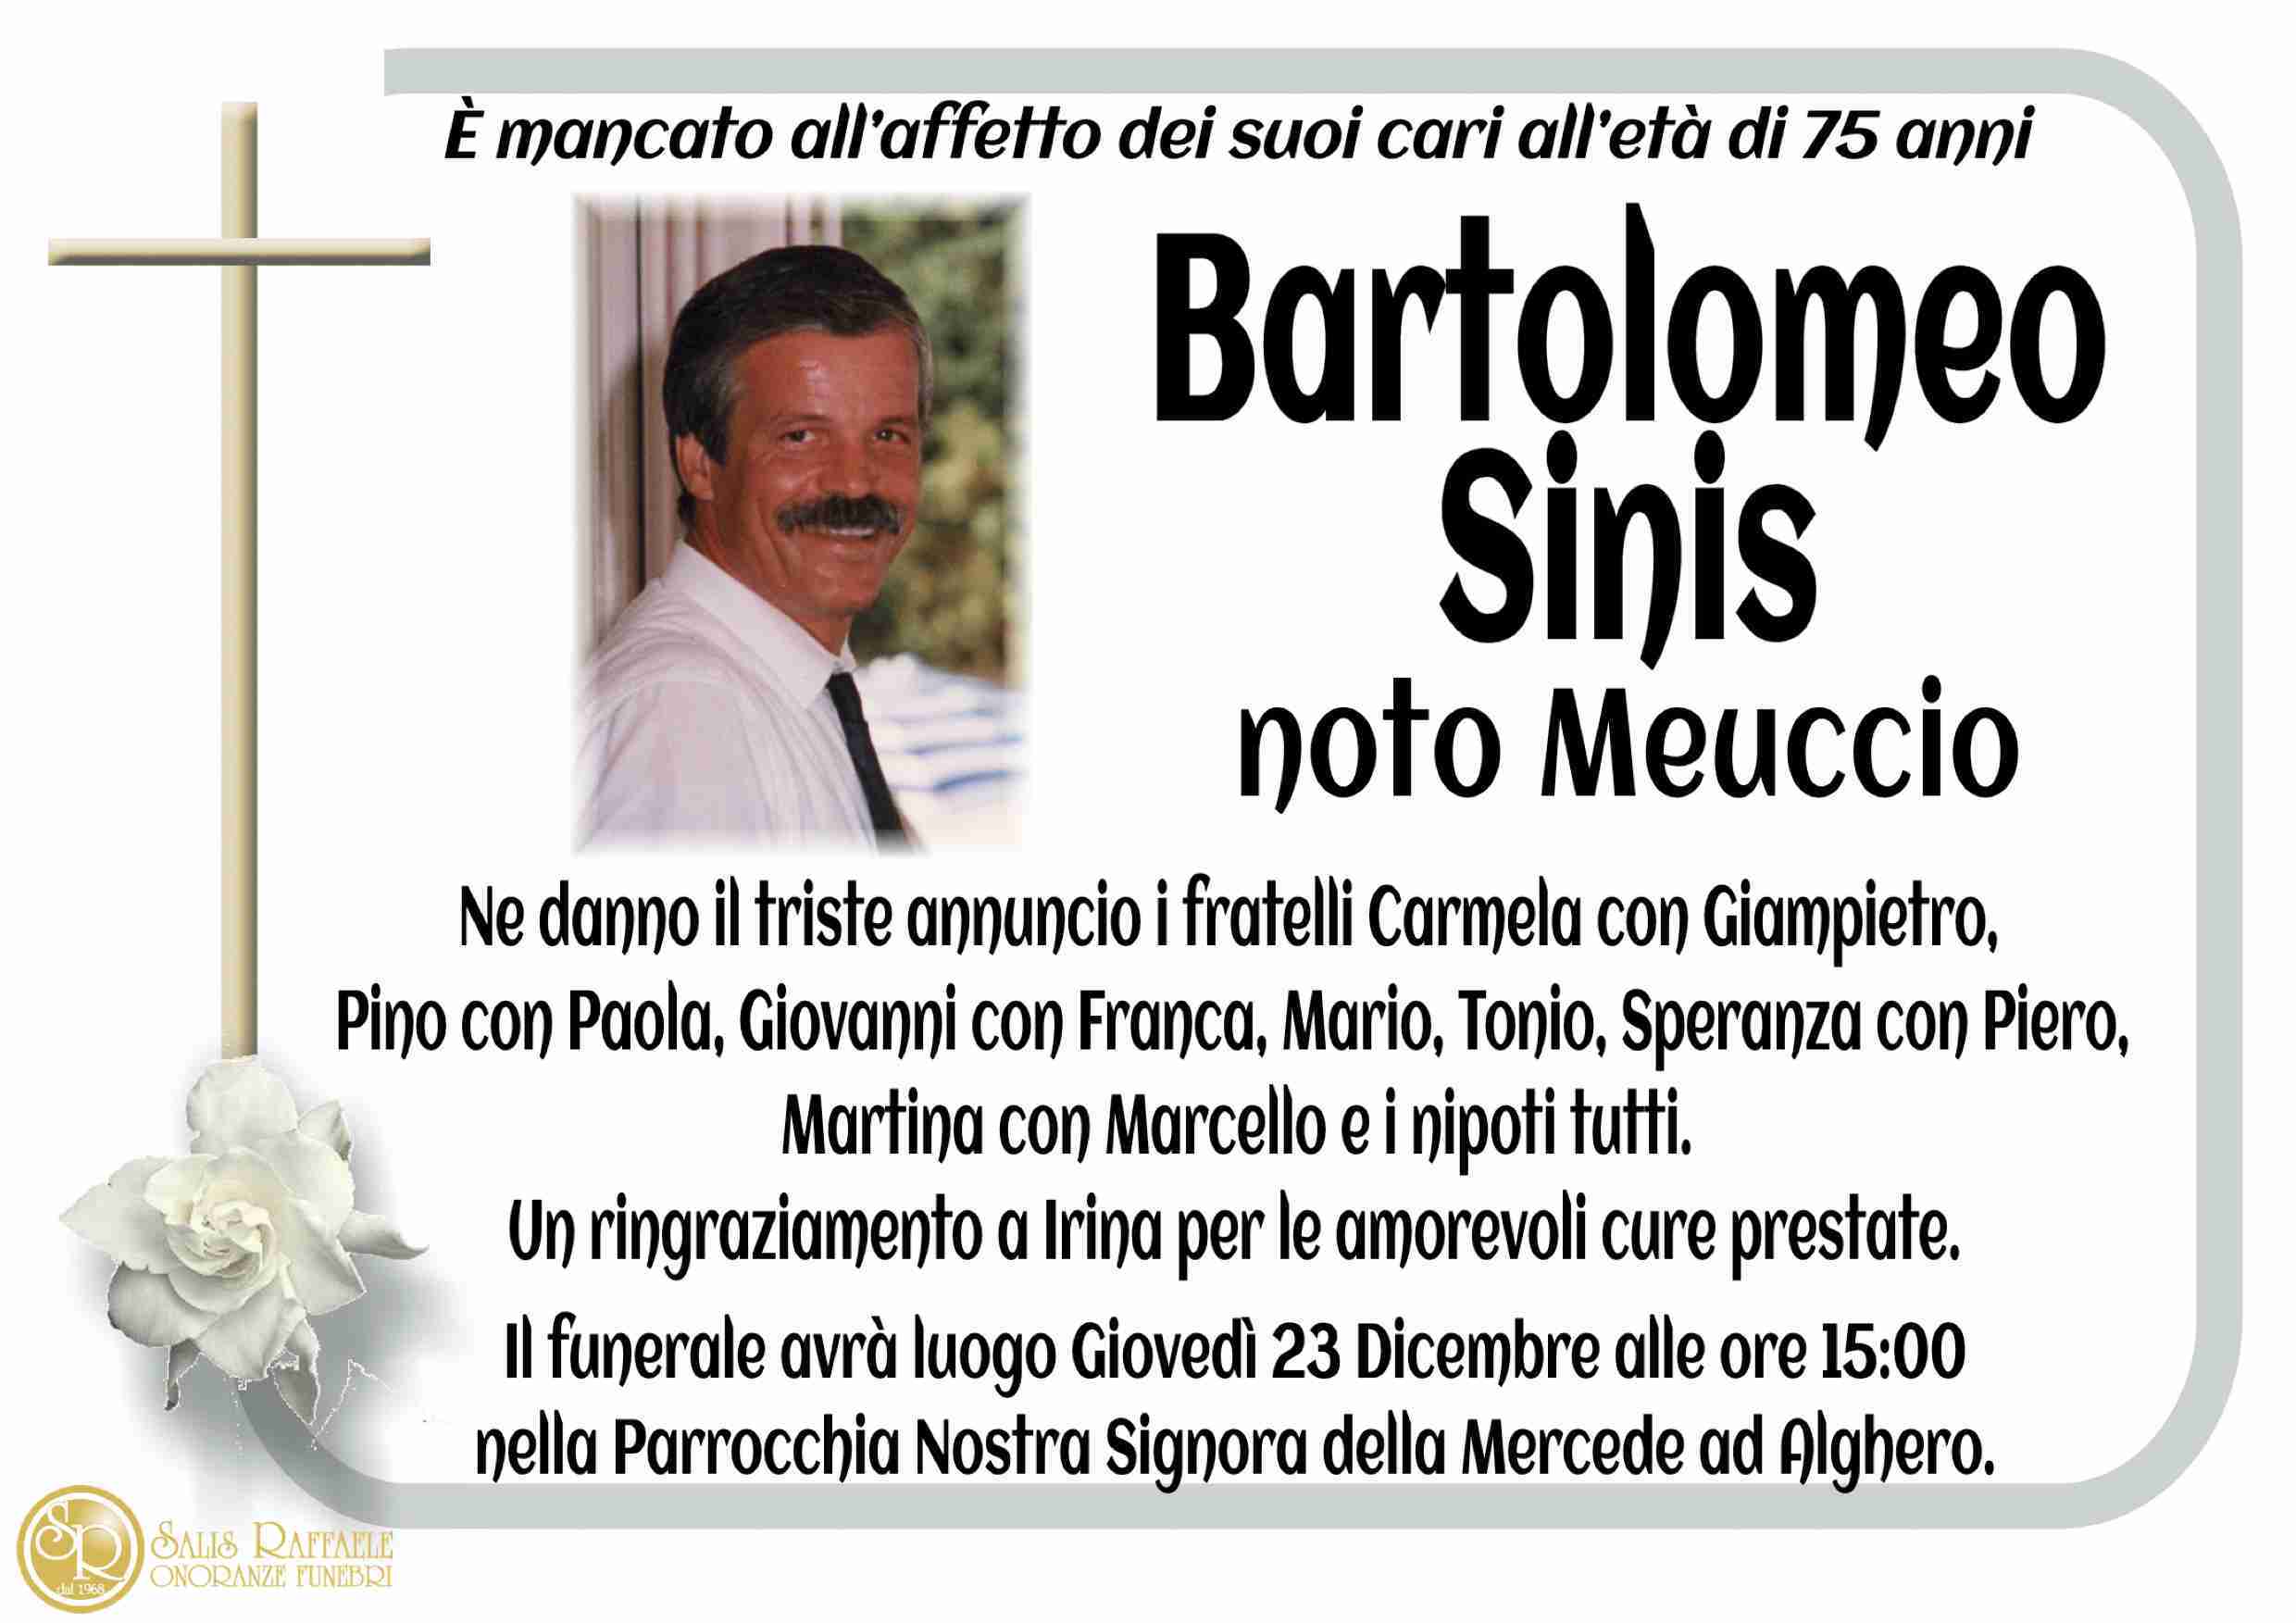 Bartolomeo Sinis